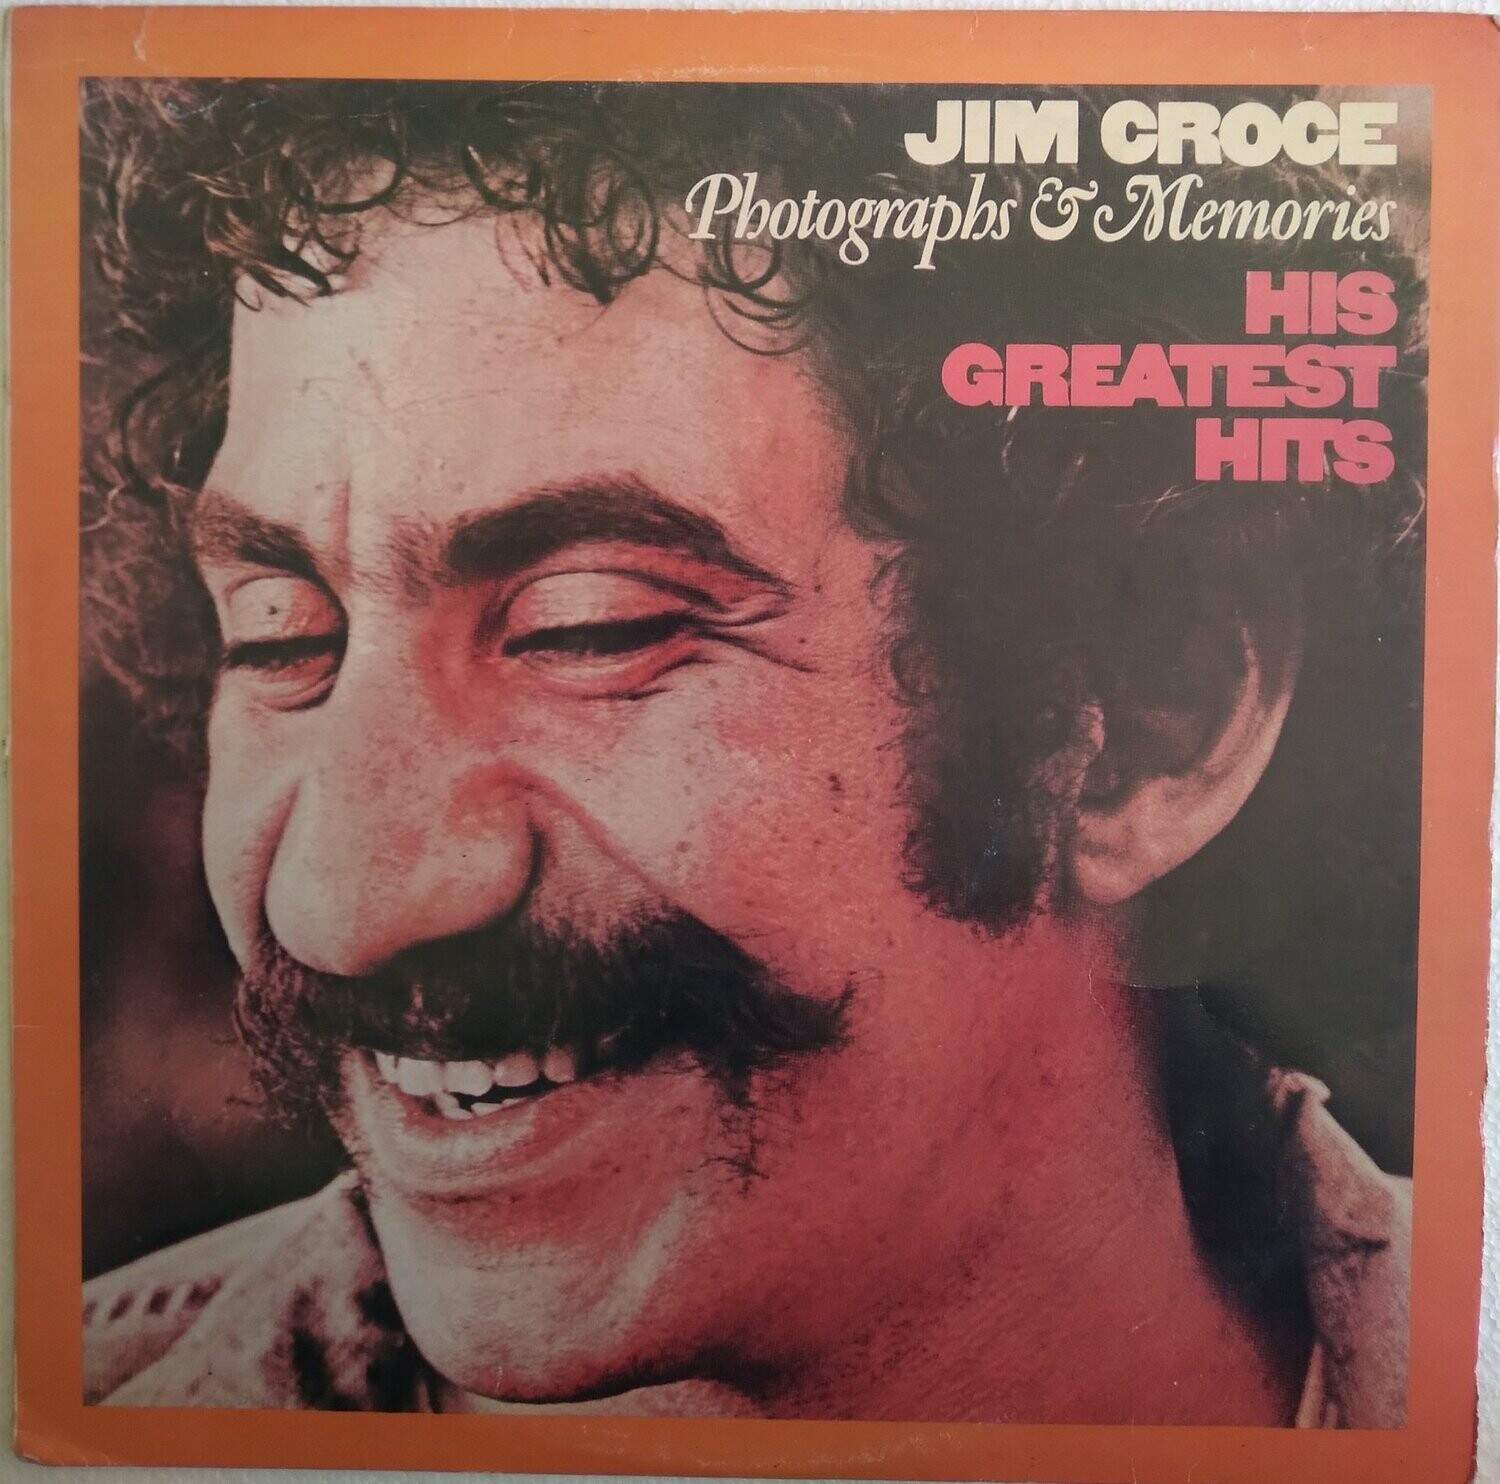 Jim Croce - Photographs & Memories (His Greatest hits)